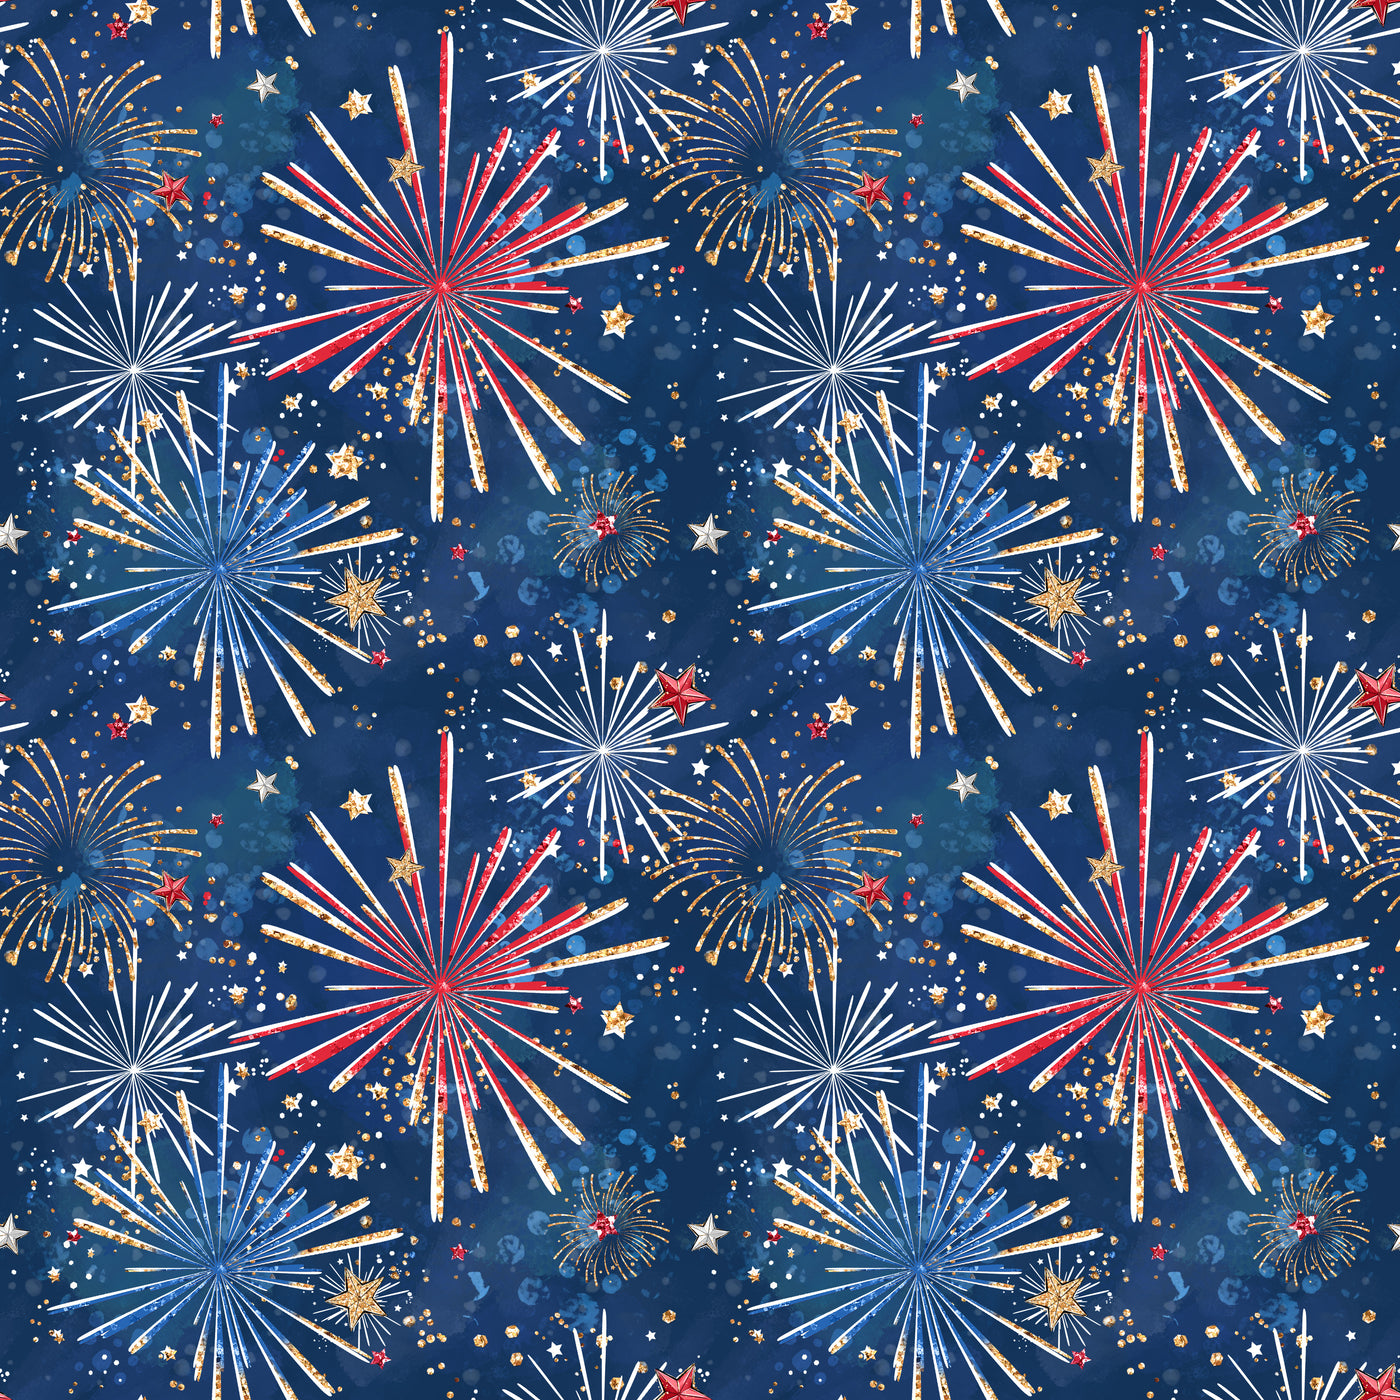 Fireworks- Ponytail